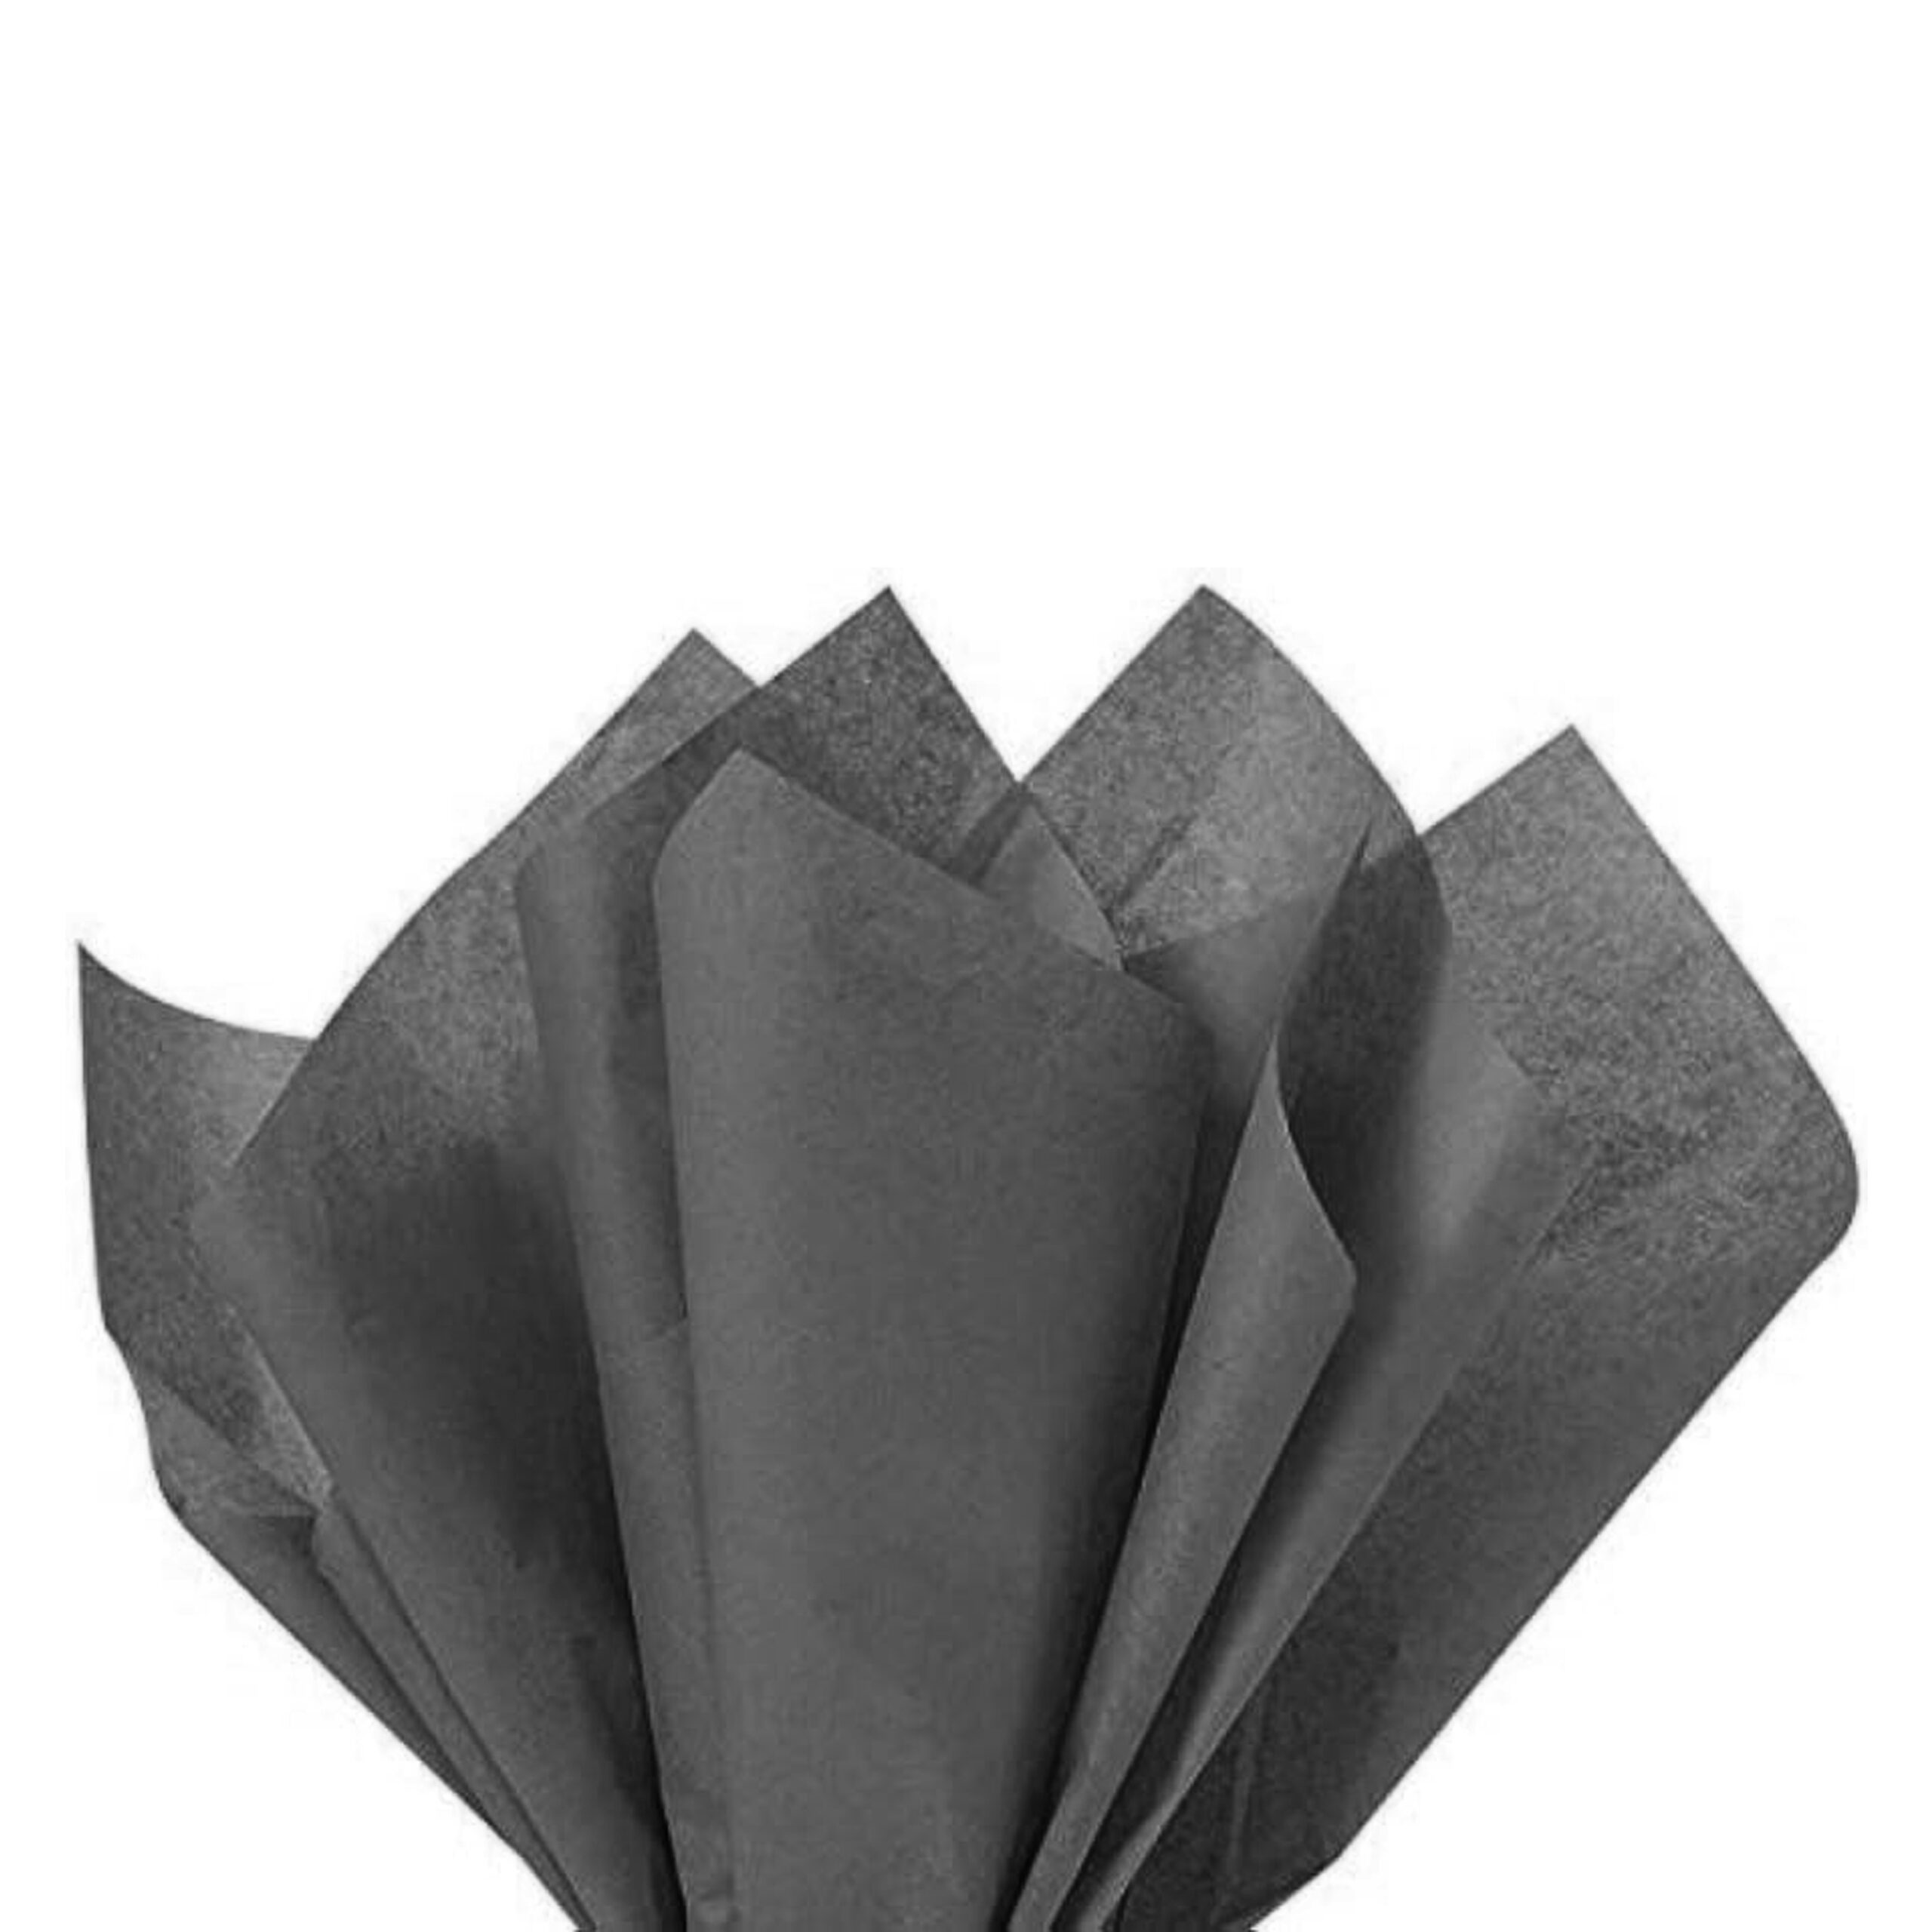 TISSUE PAPER
BLACK 10 SHEETS
50x66cm